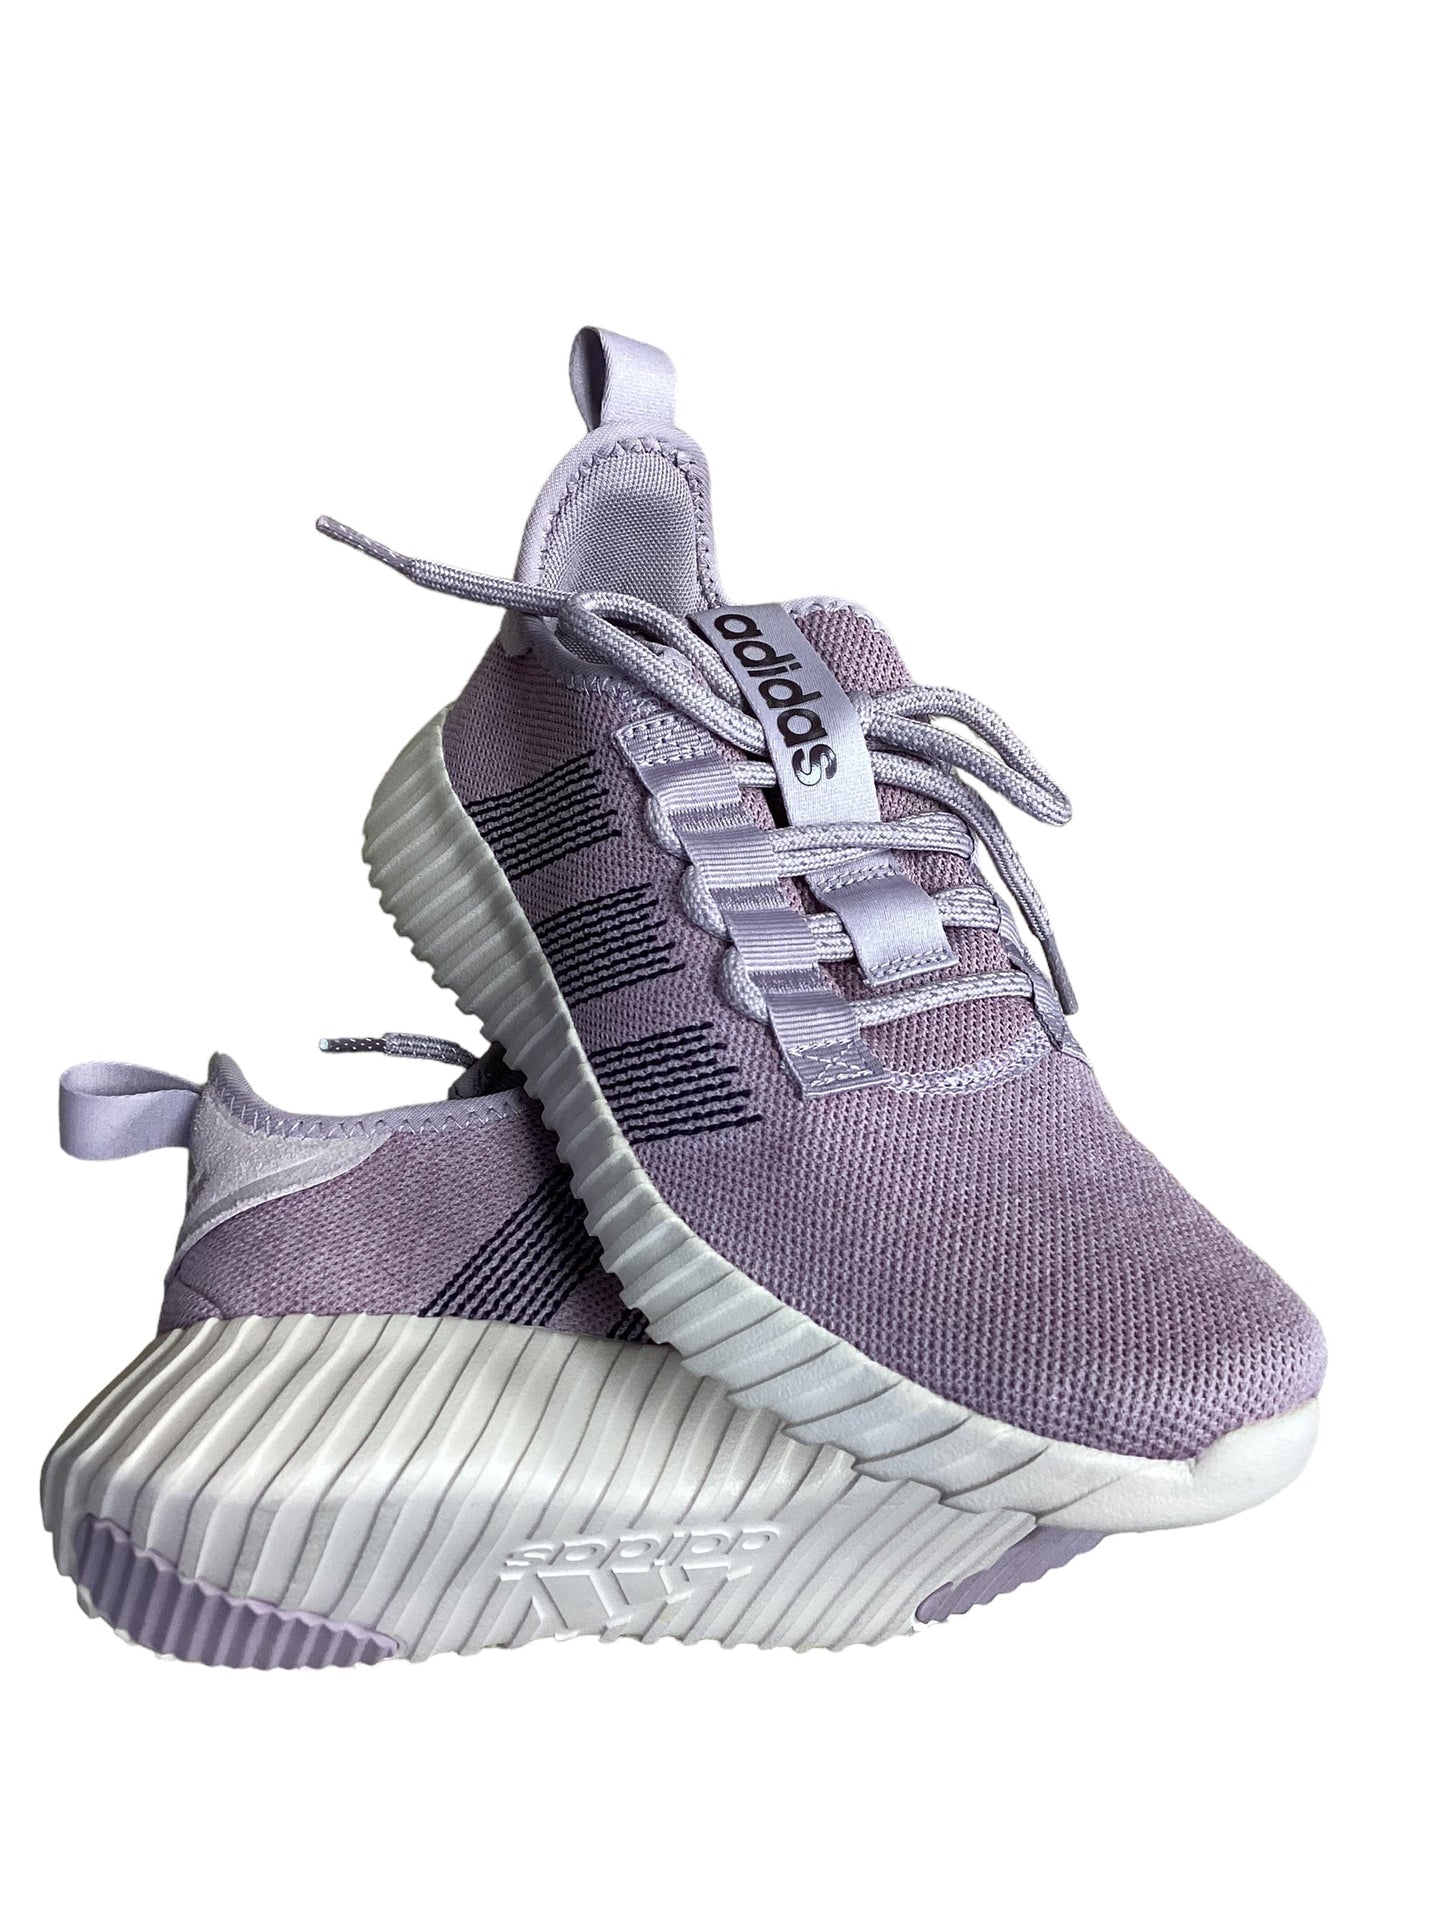 Purple Shoes Athletic Adidas, Size 8